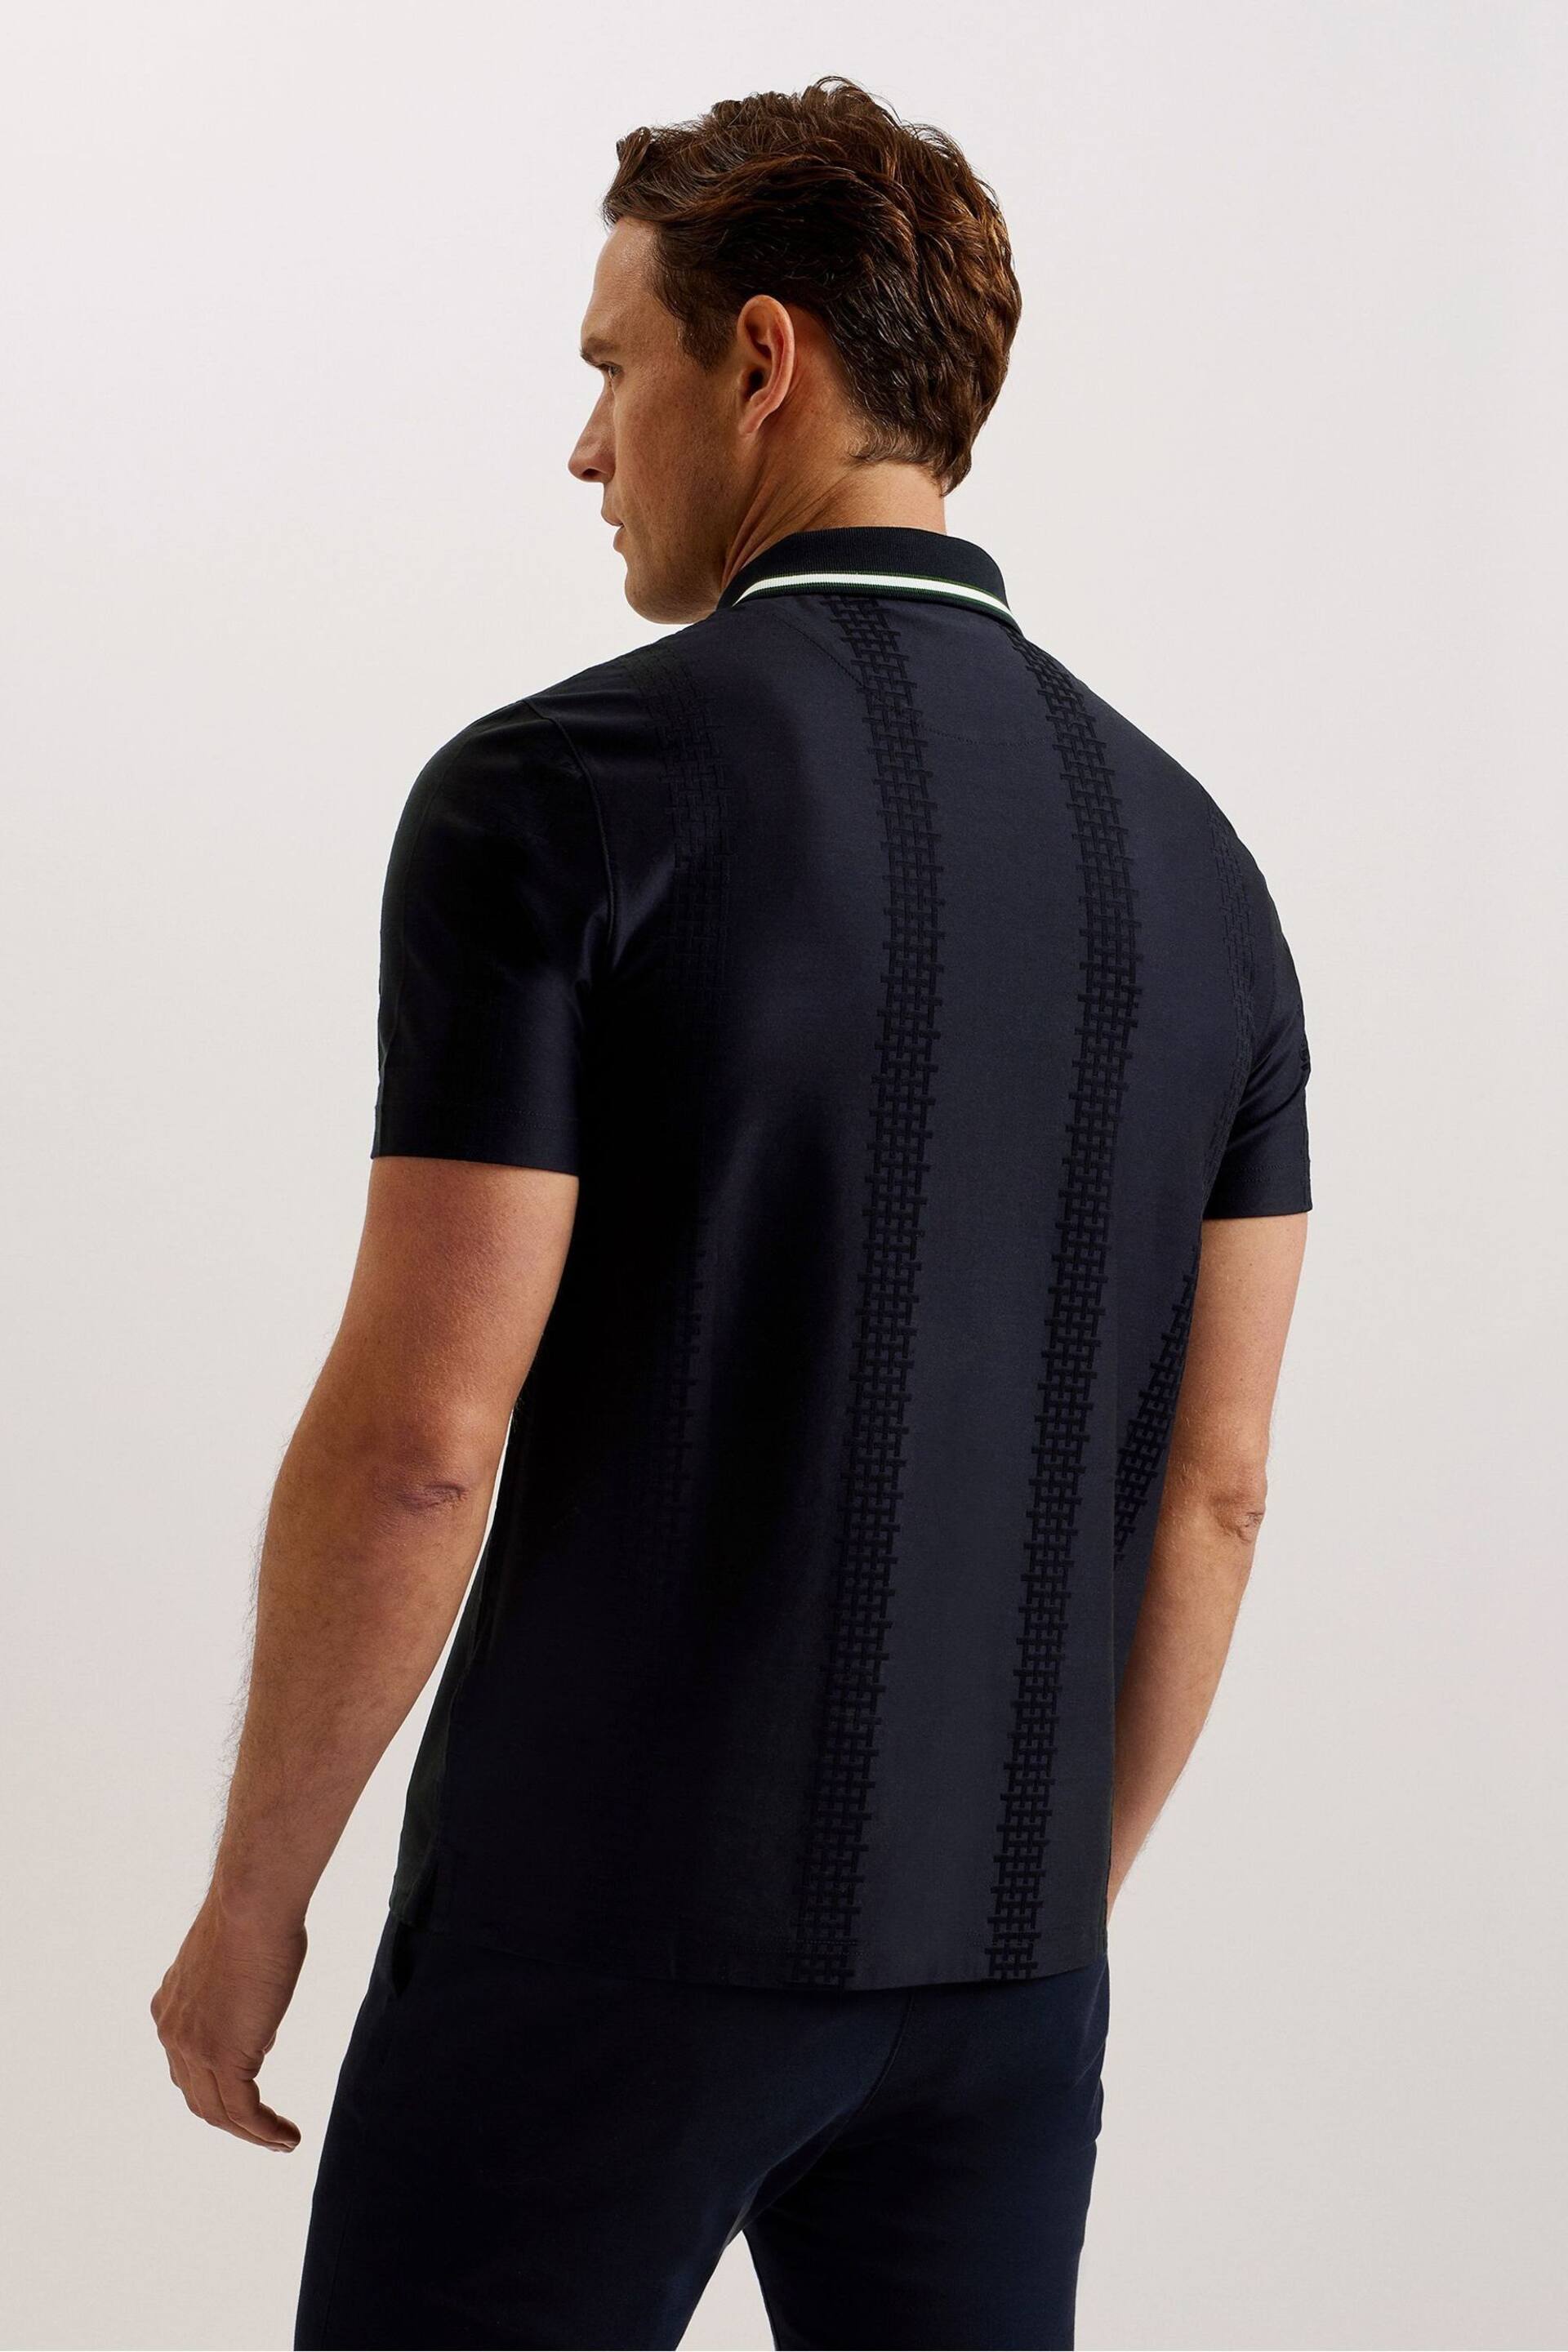 Ted Baker Blue Orbite Slim Fit Jacquard Polo Shirt - Image 2 of 6